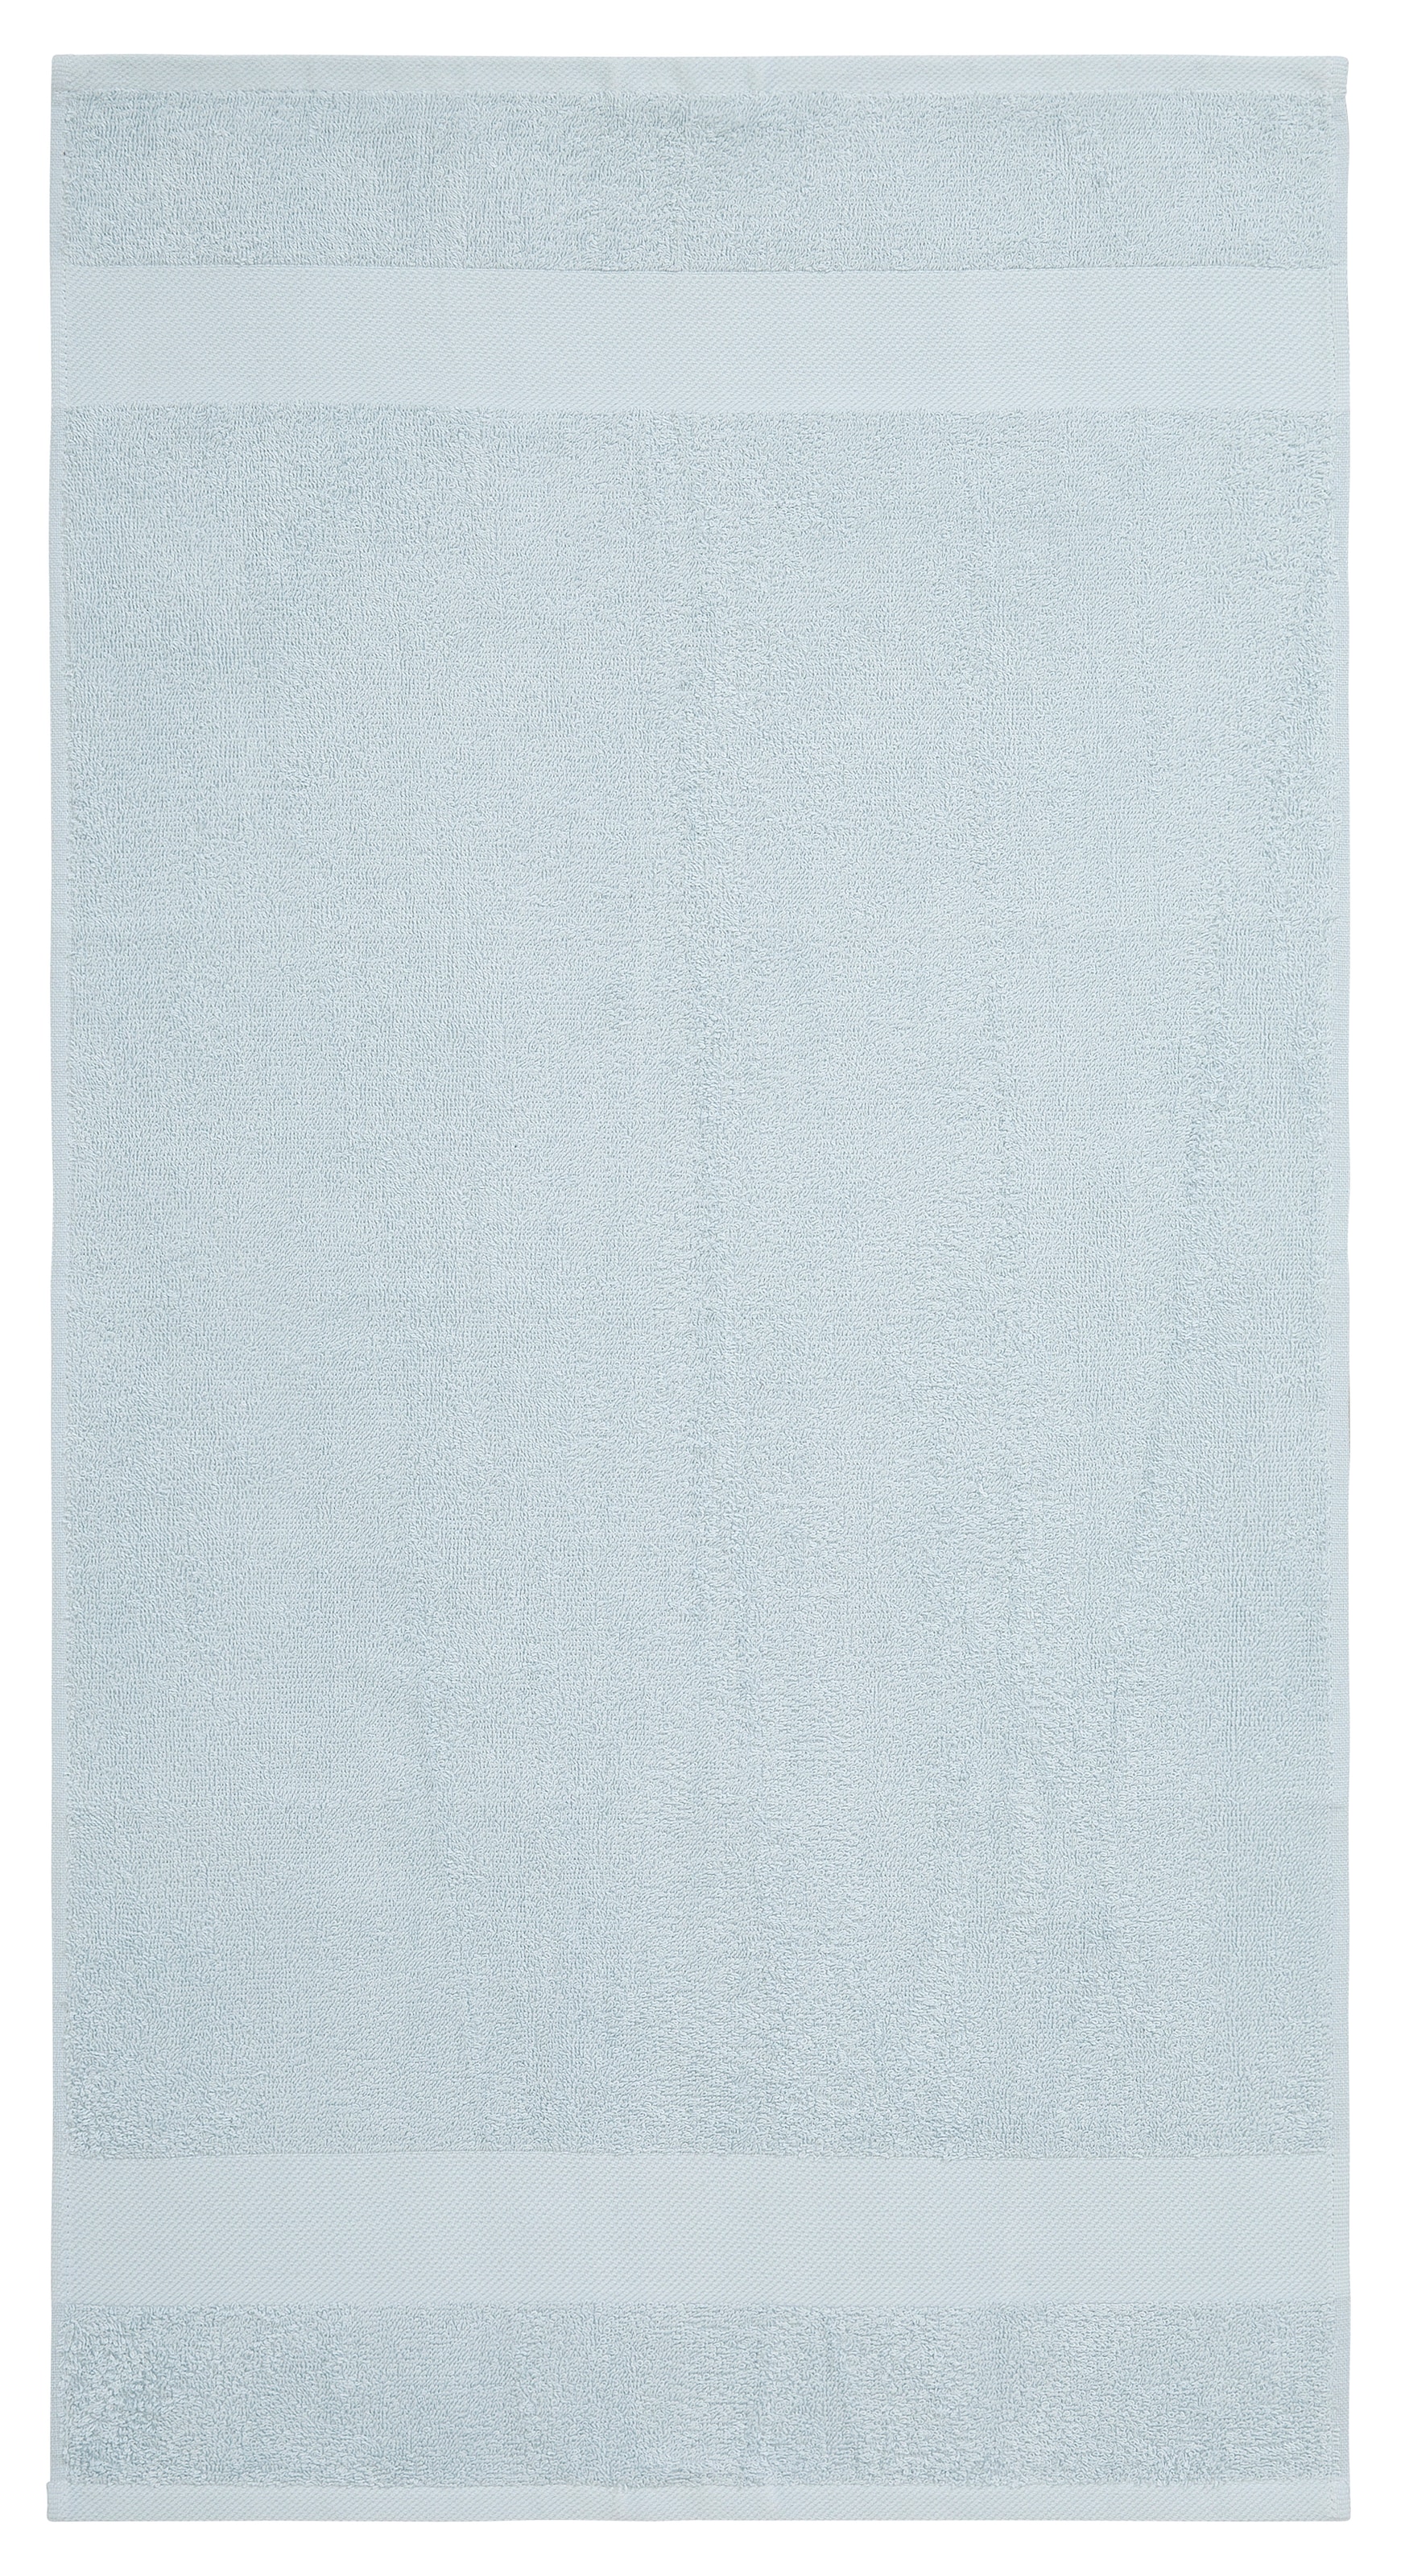 my home Handtuch Set »Melli«, Set, 10 tlg., Walkfrottee, Handtuchset in  dezenten Farben, 100% Baumwoll-Handtücher im Online-Shop bestellen